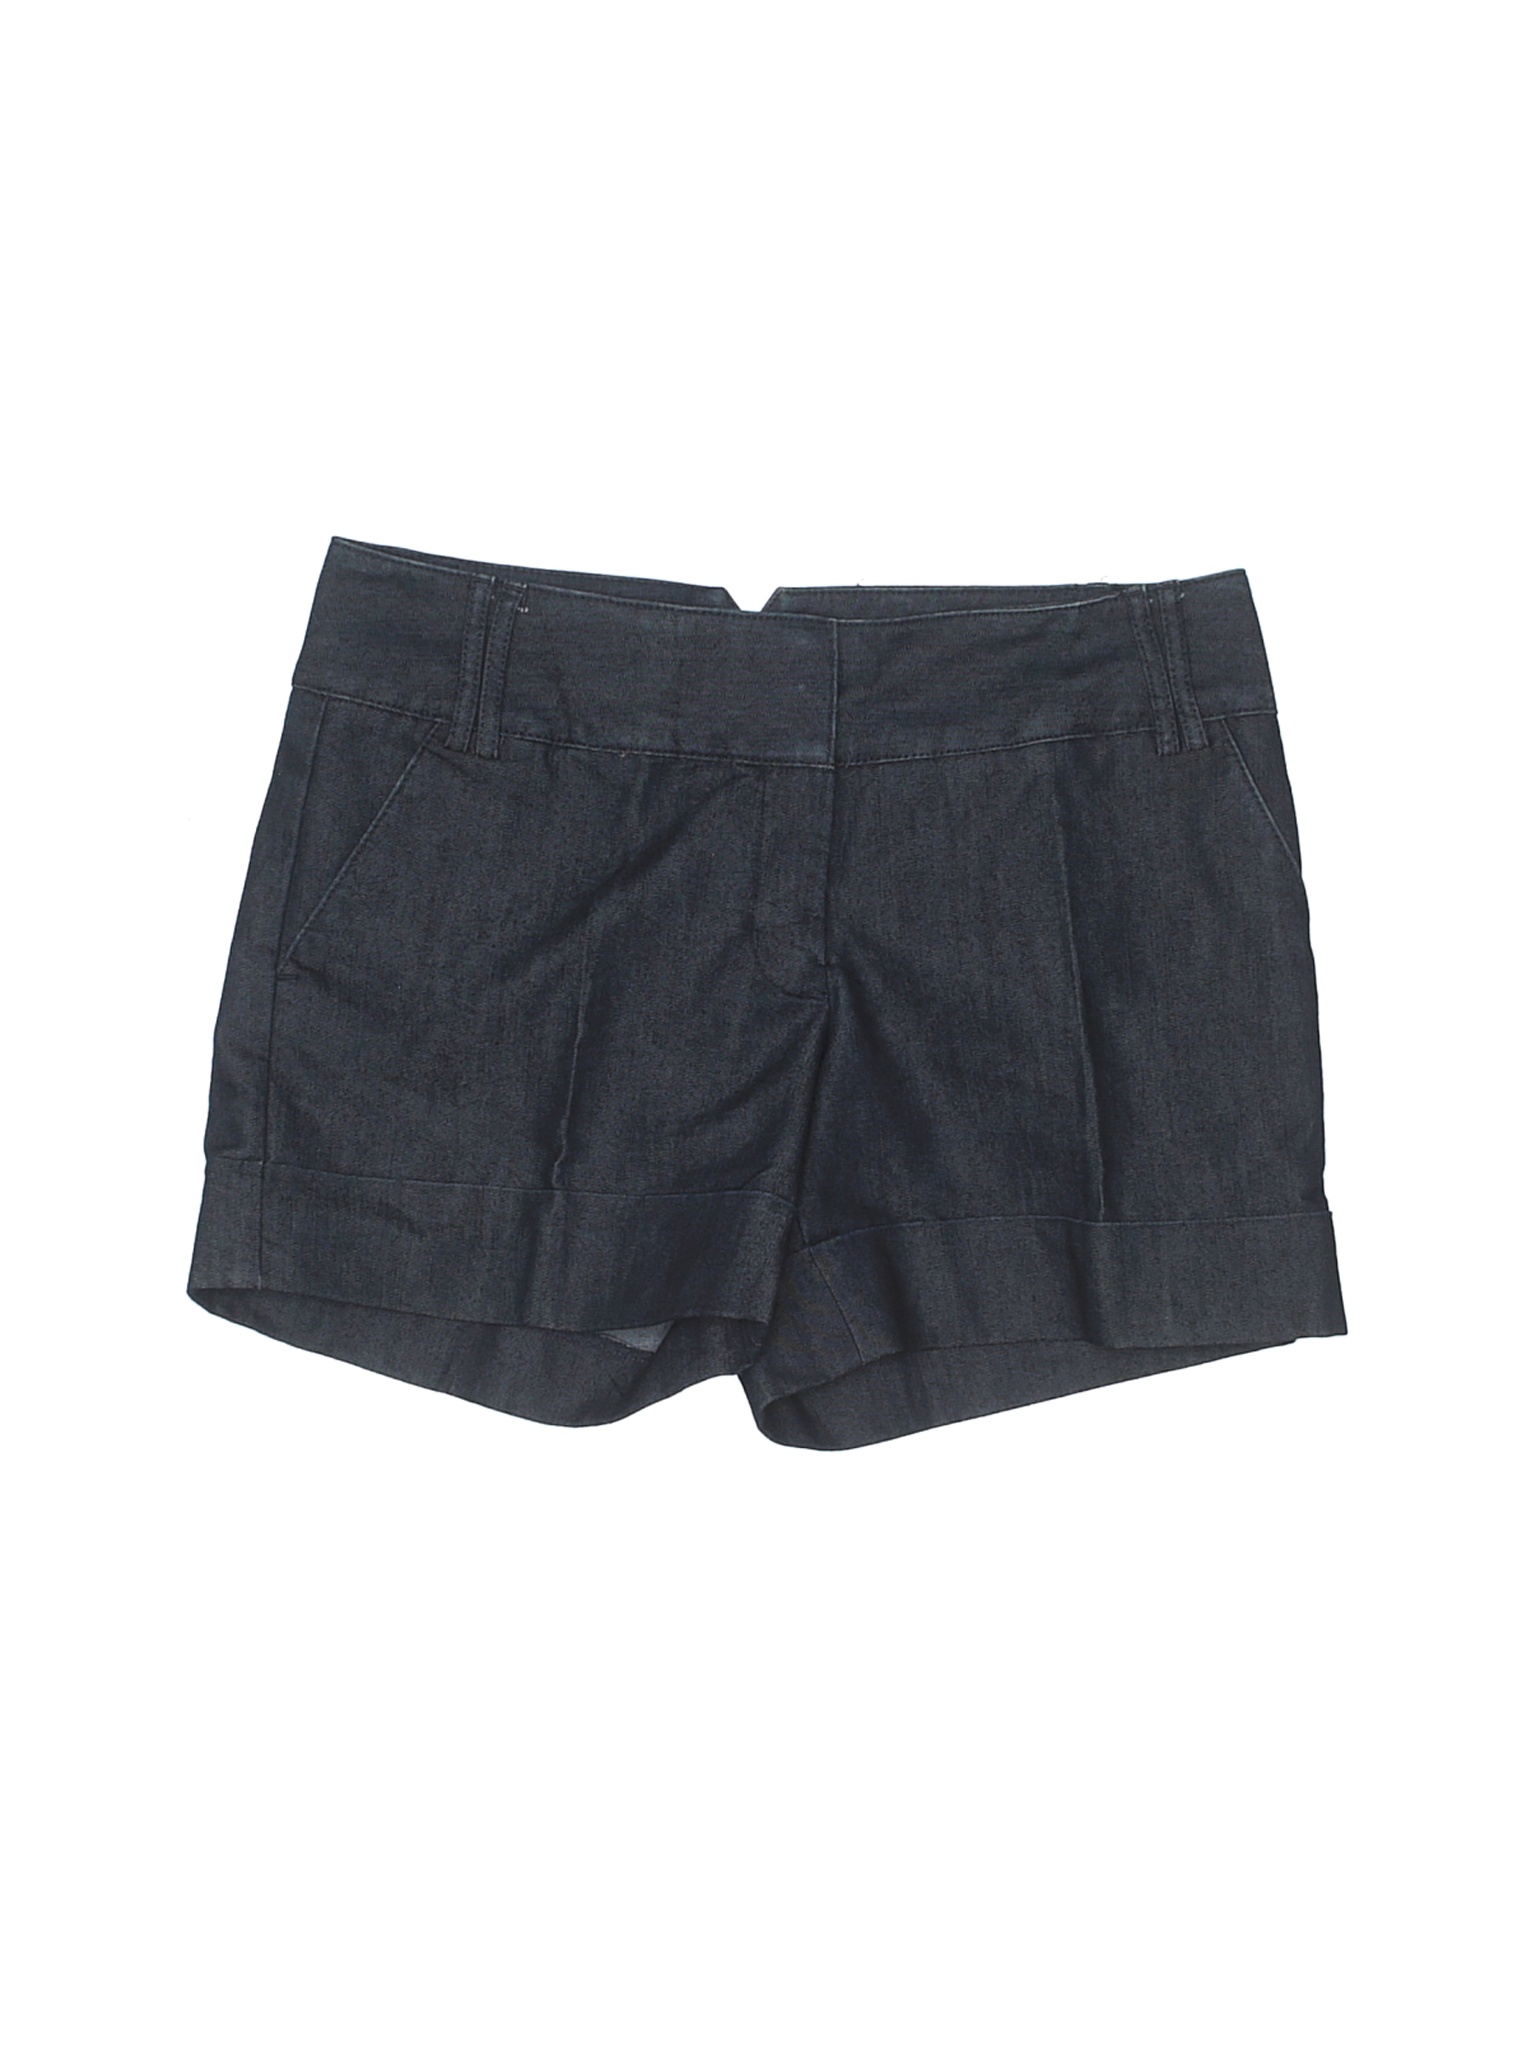 Express Women Black Denim Shorts 2 | eBay